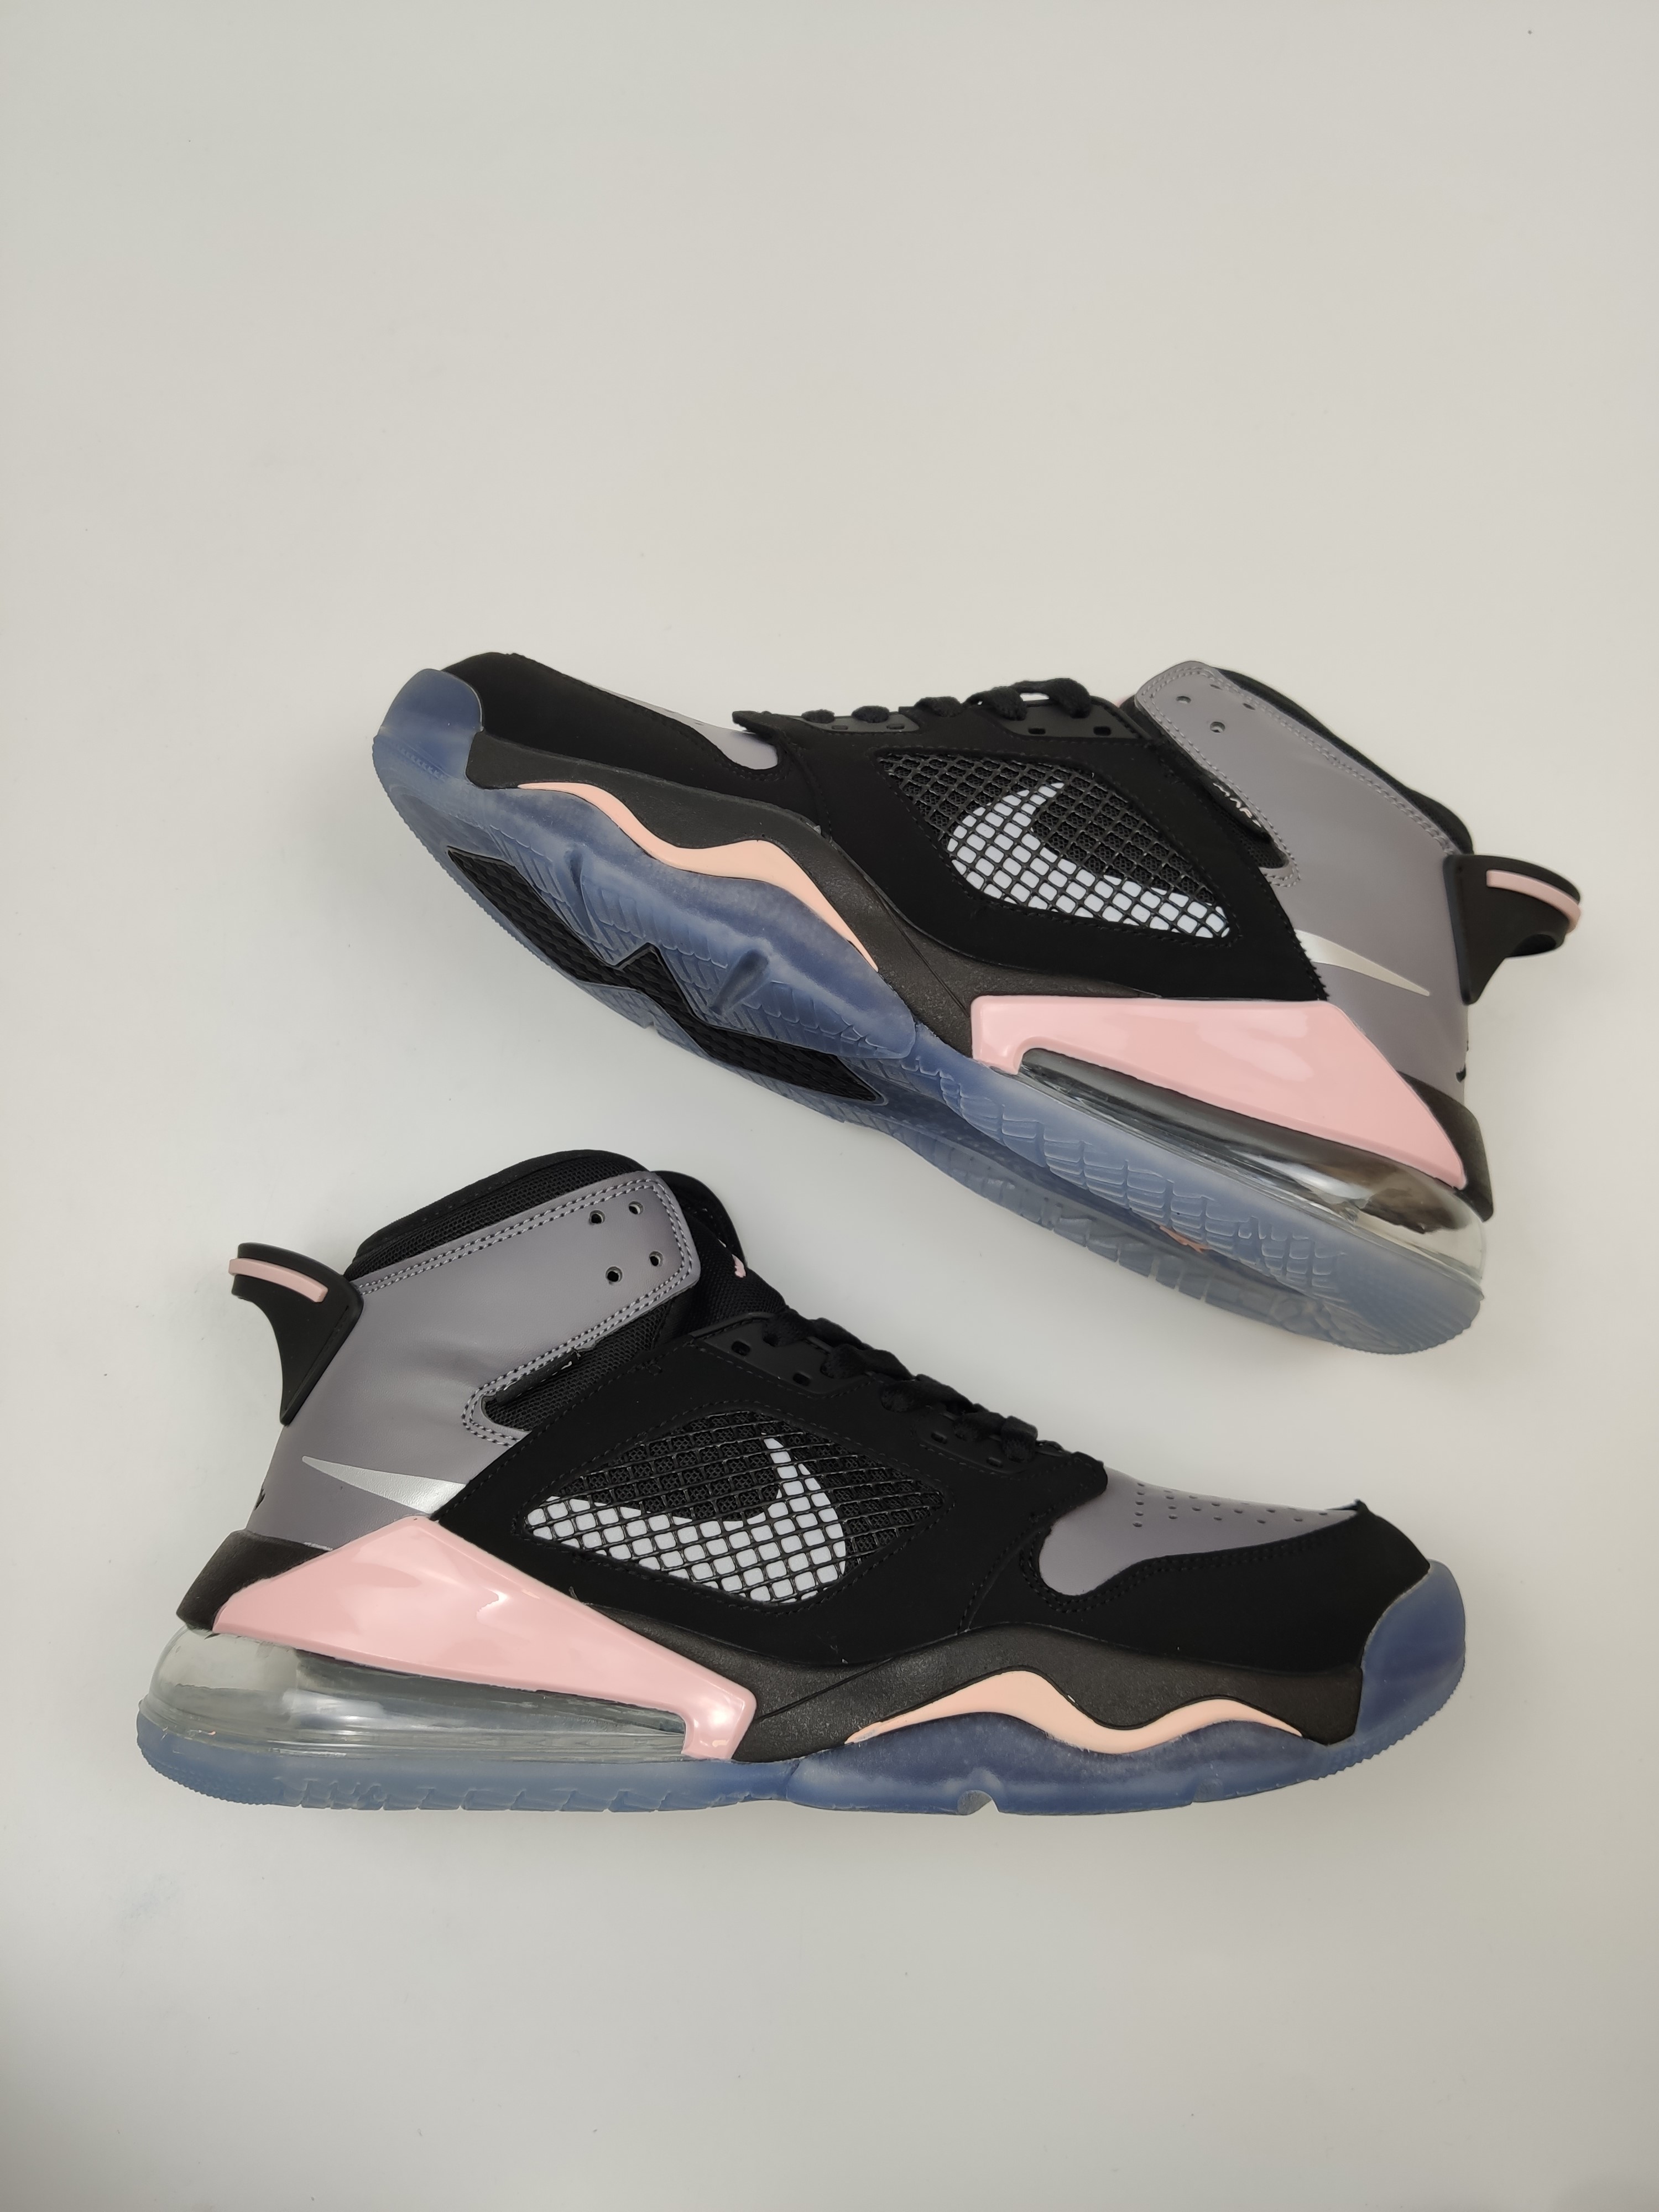 2019 Men AJ Mars x27 Black Grey Pink Shoes